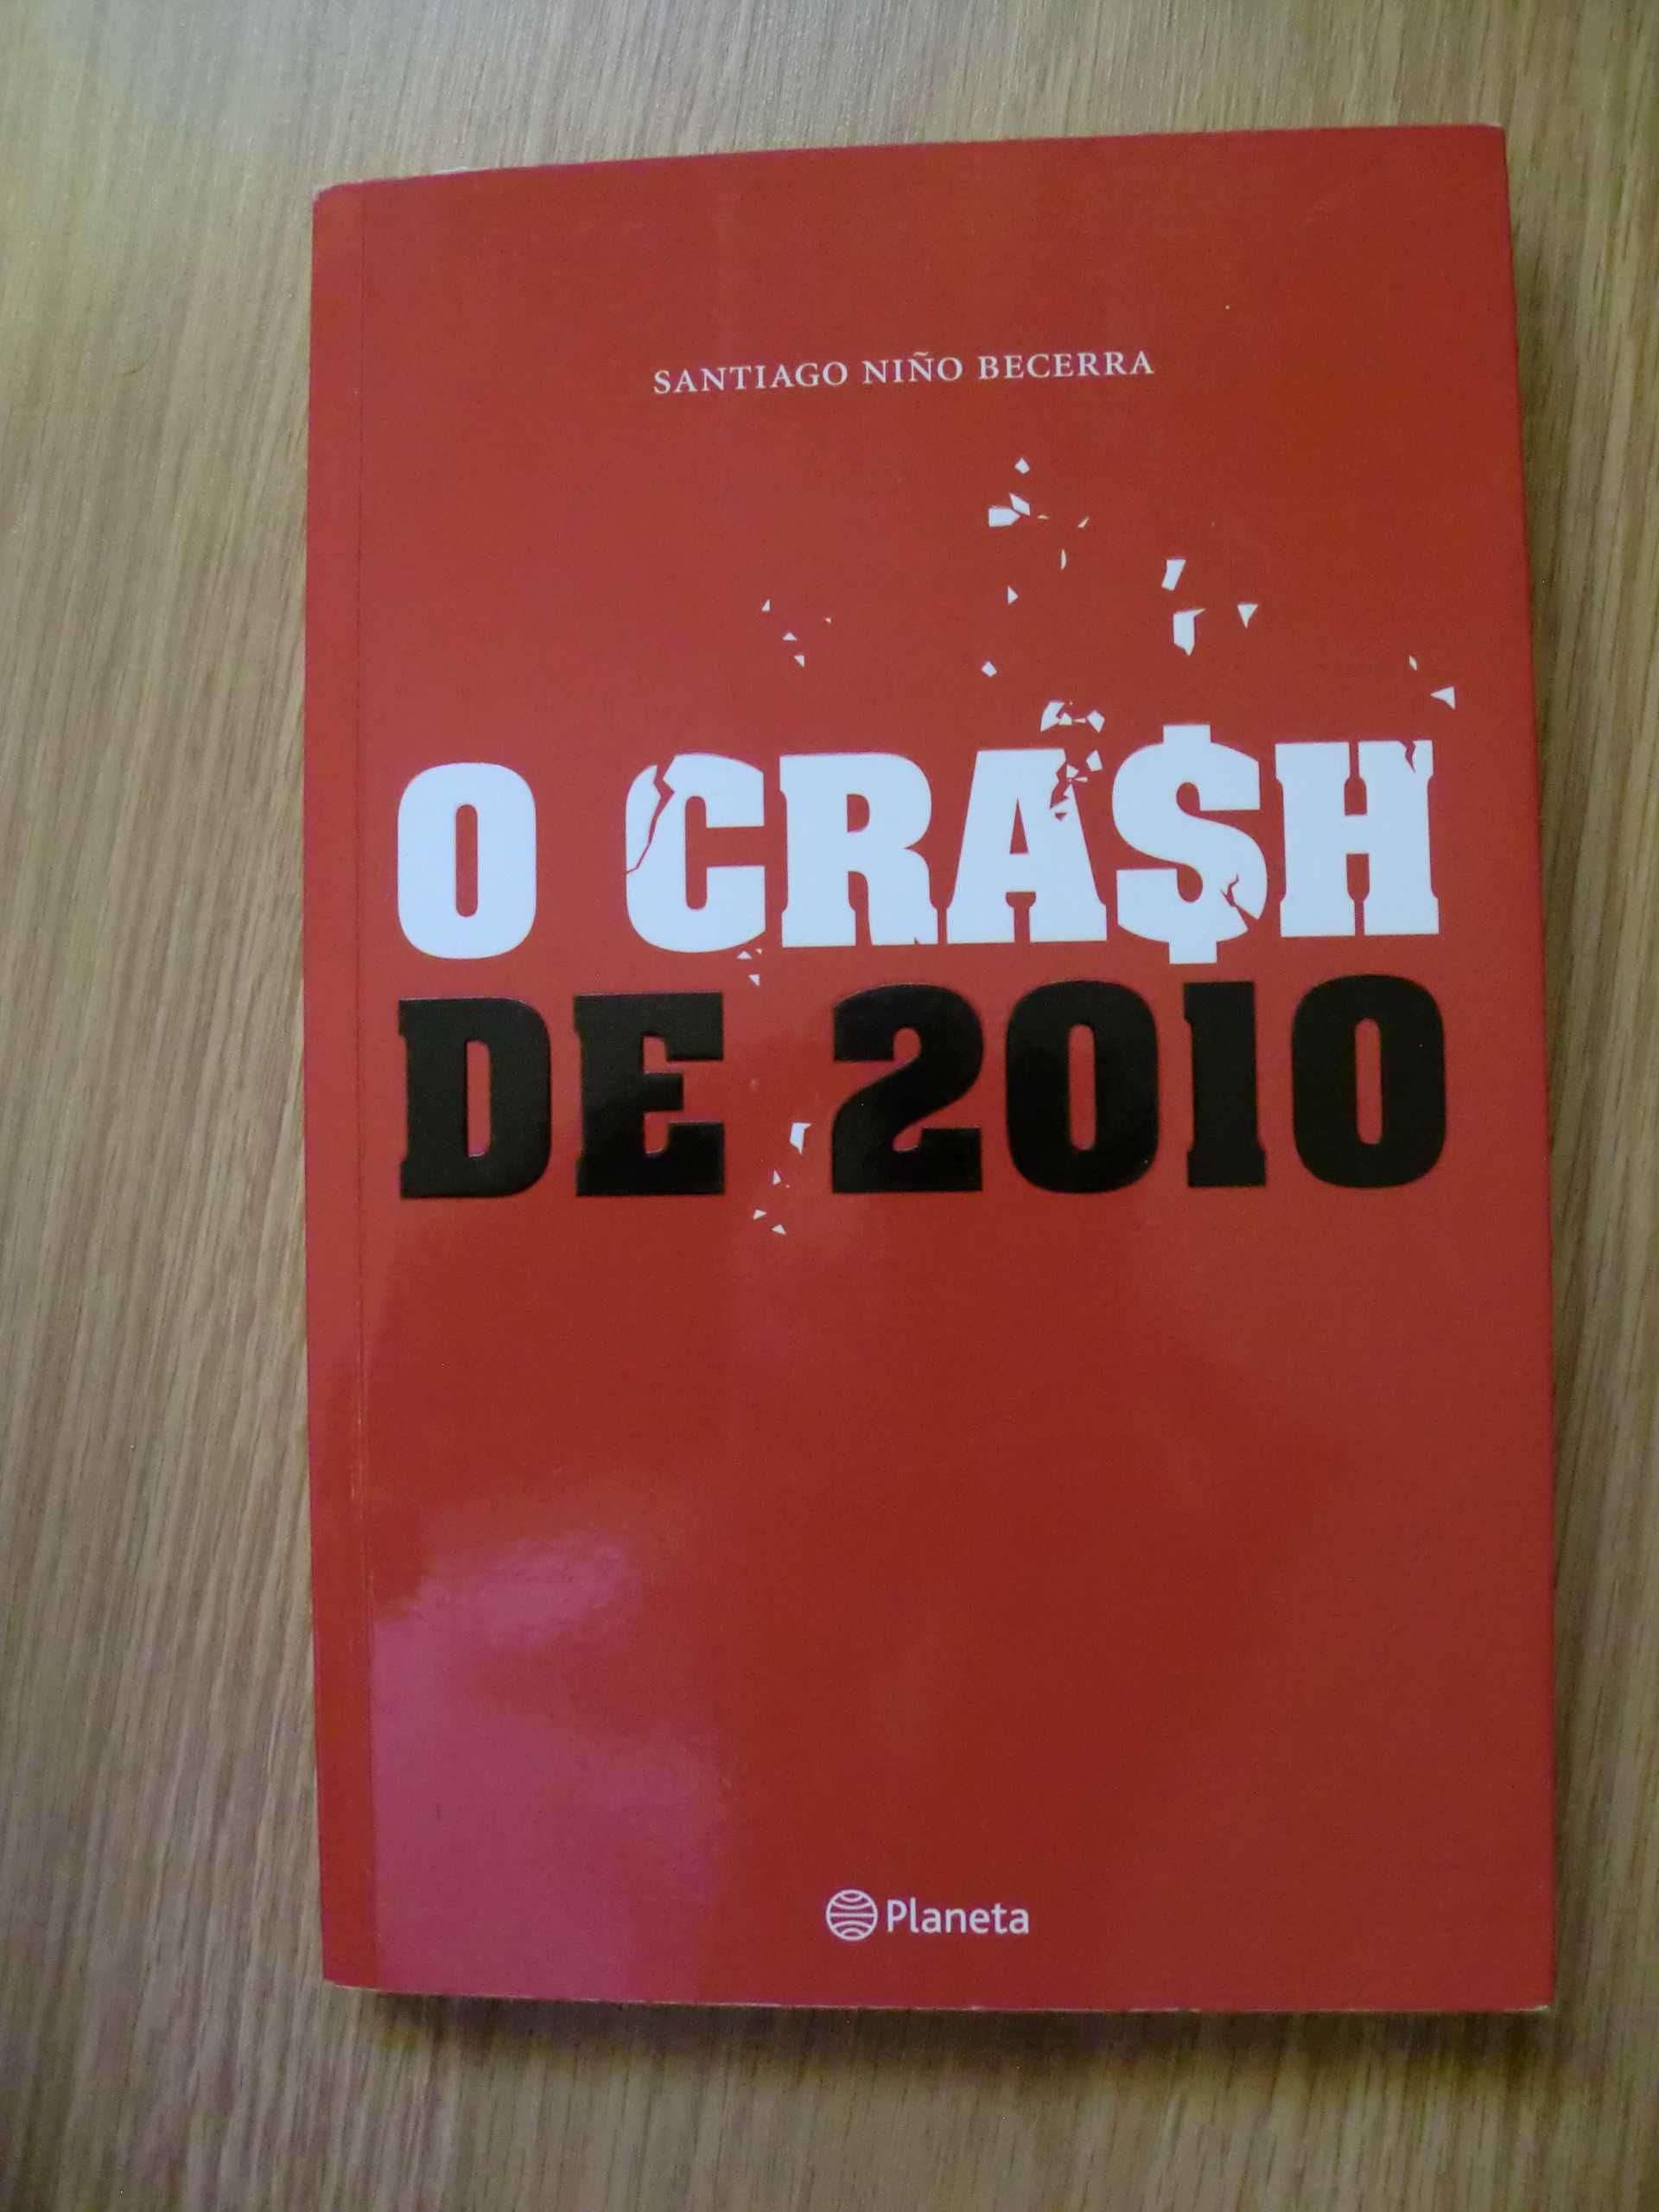 O Crash de 2010
de Santiago Nino Becerra